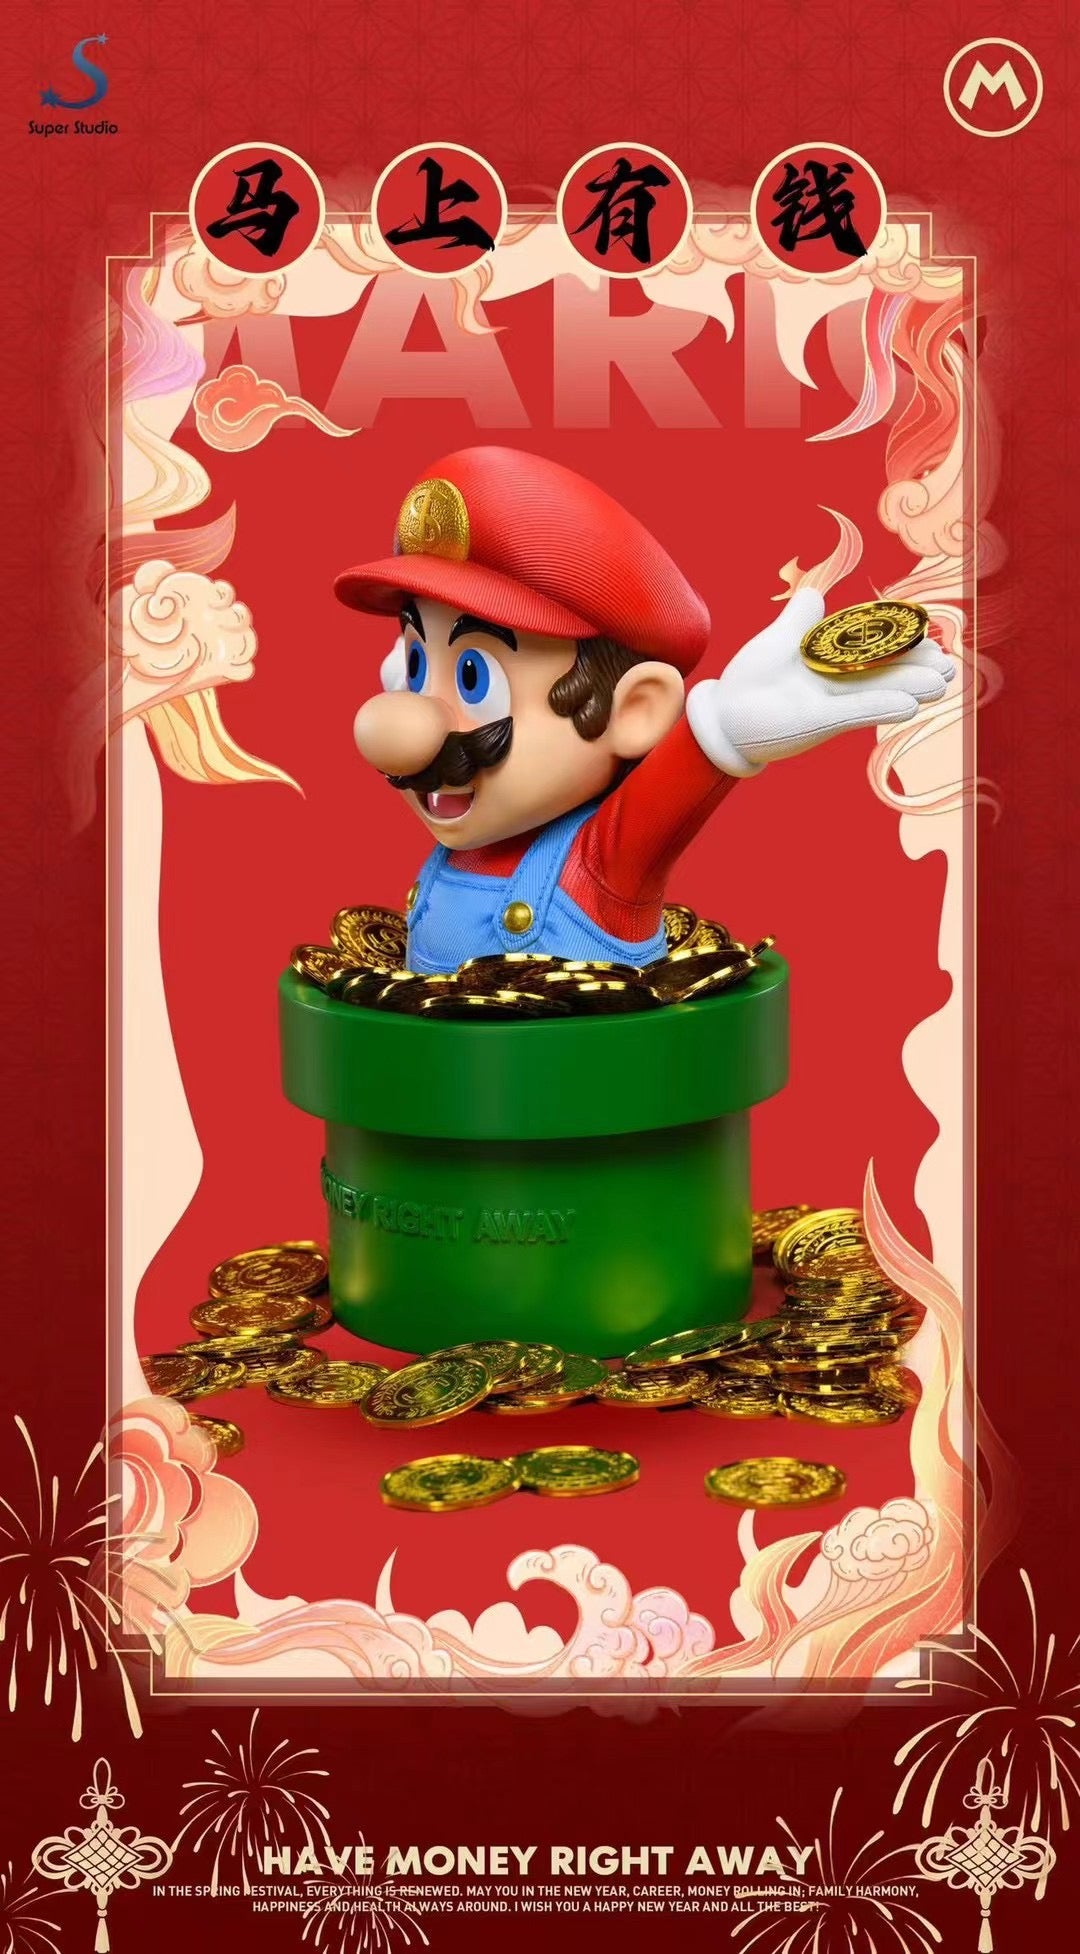 Super Studio - Have Money Right Away Sudden Wealth Mario | 马上有钱 暴富马里奥